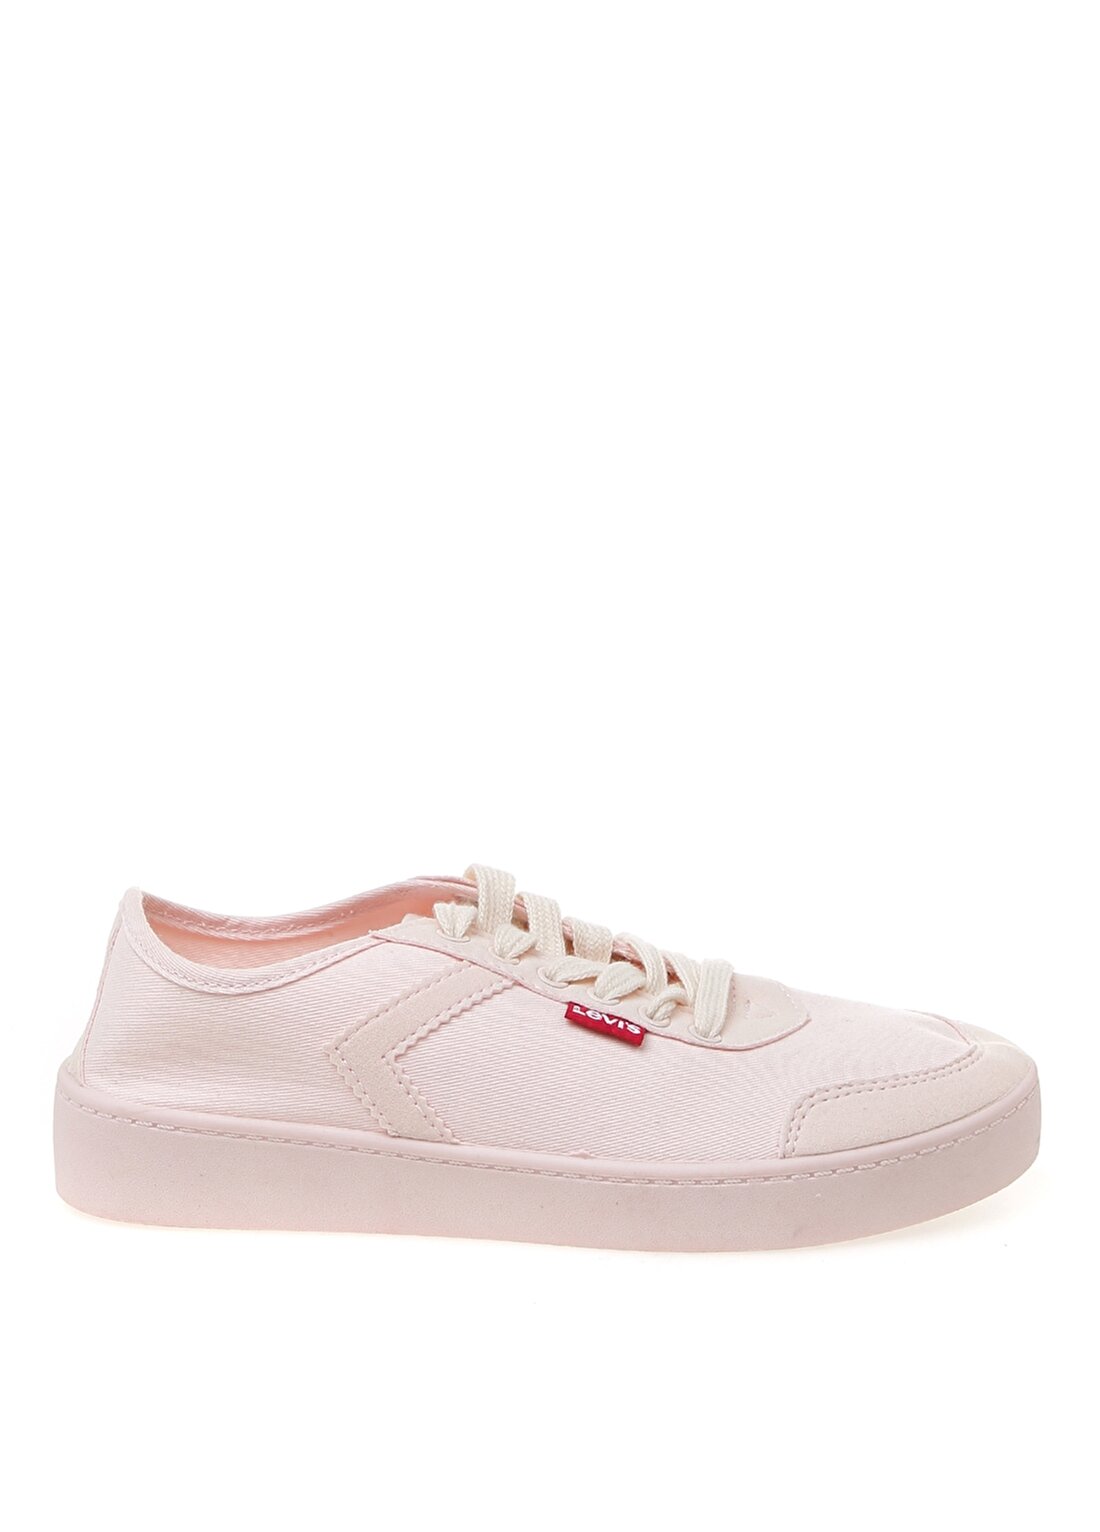 Levis Light Pink Sneaker